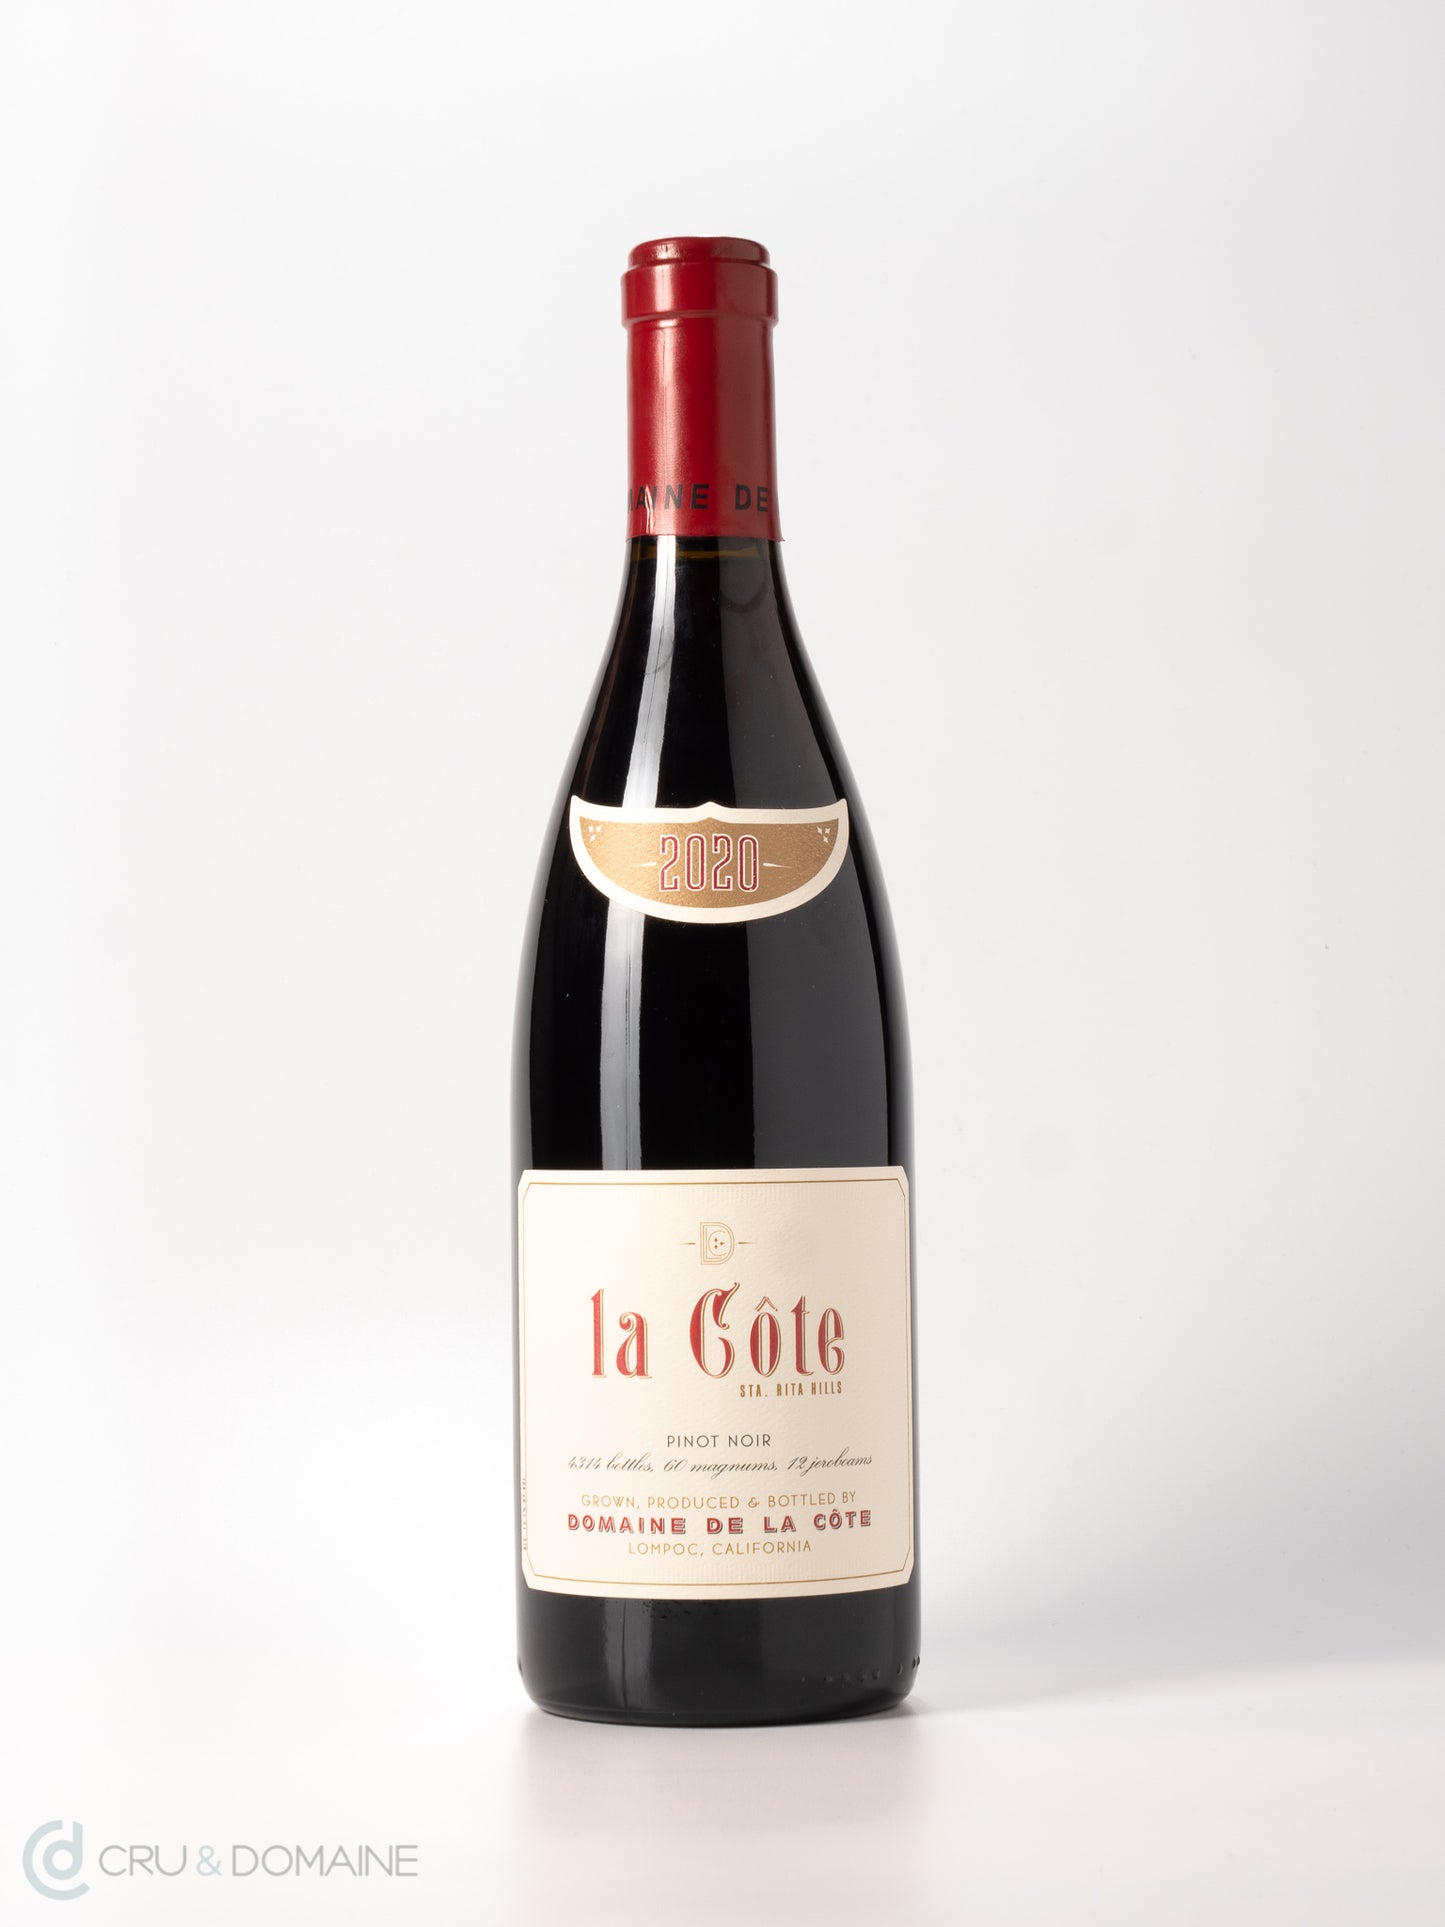 2020 Domaine de la Cote, ‘La Cote’, Pinot Noir, Sta. Rita Hills, CA